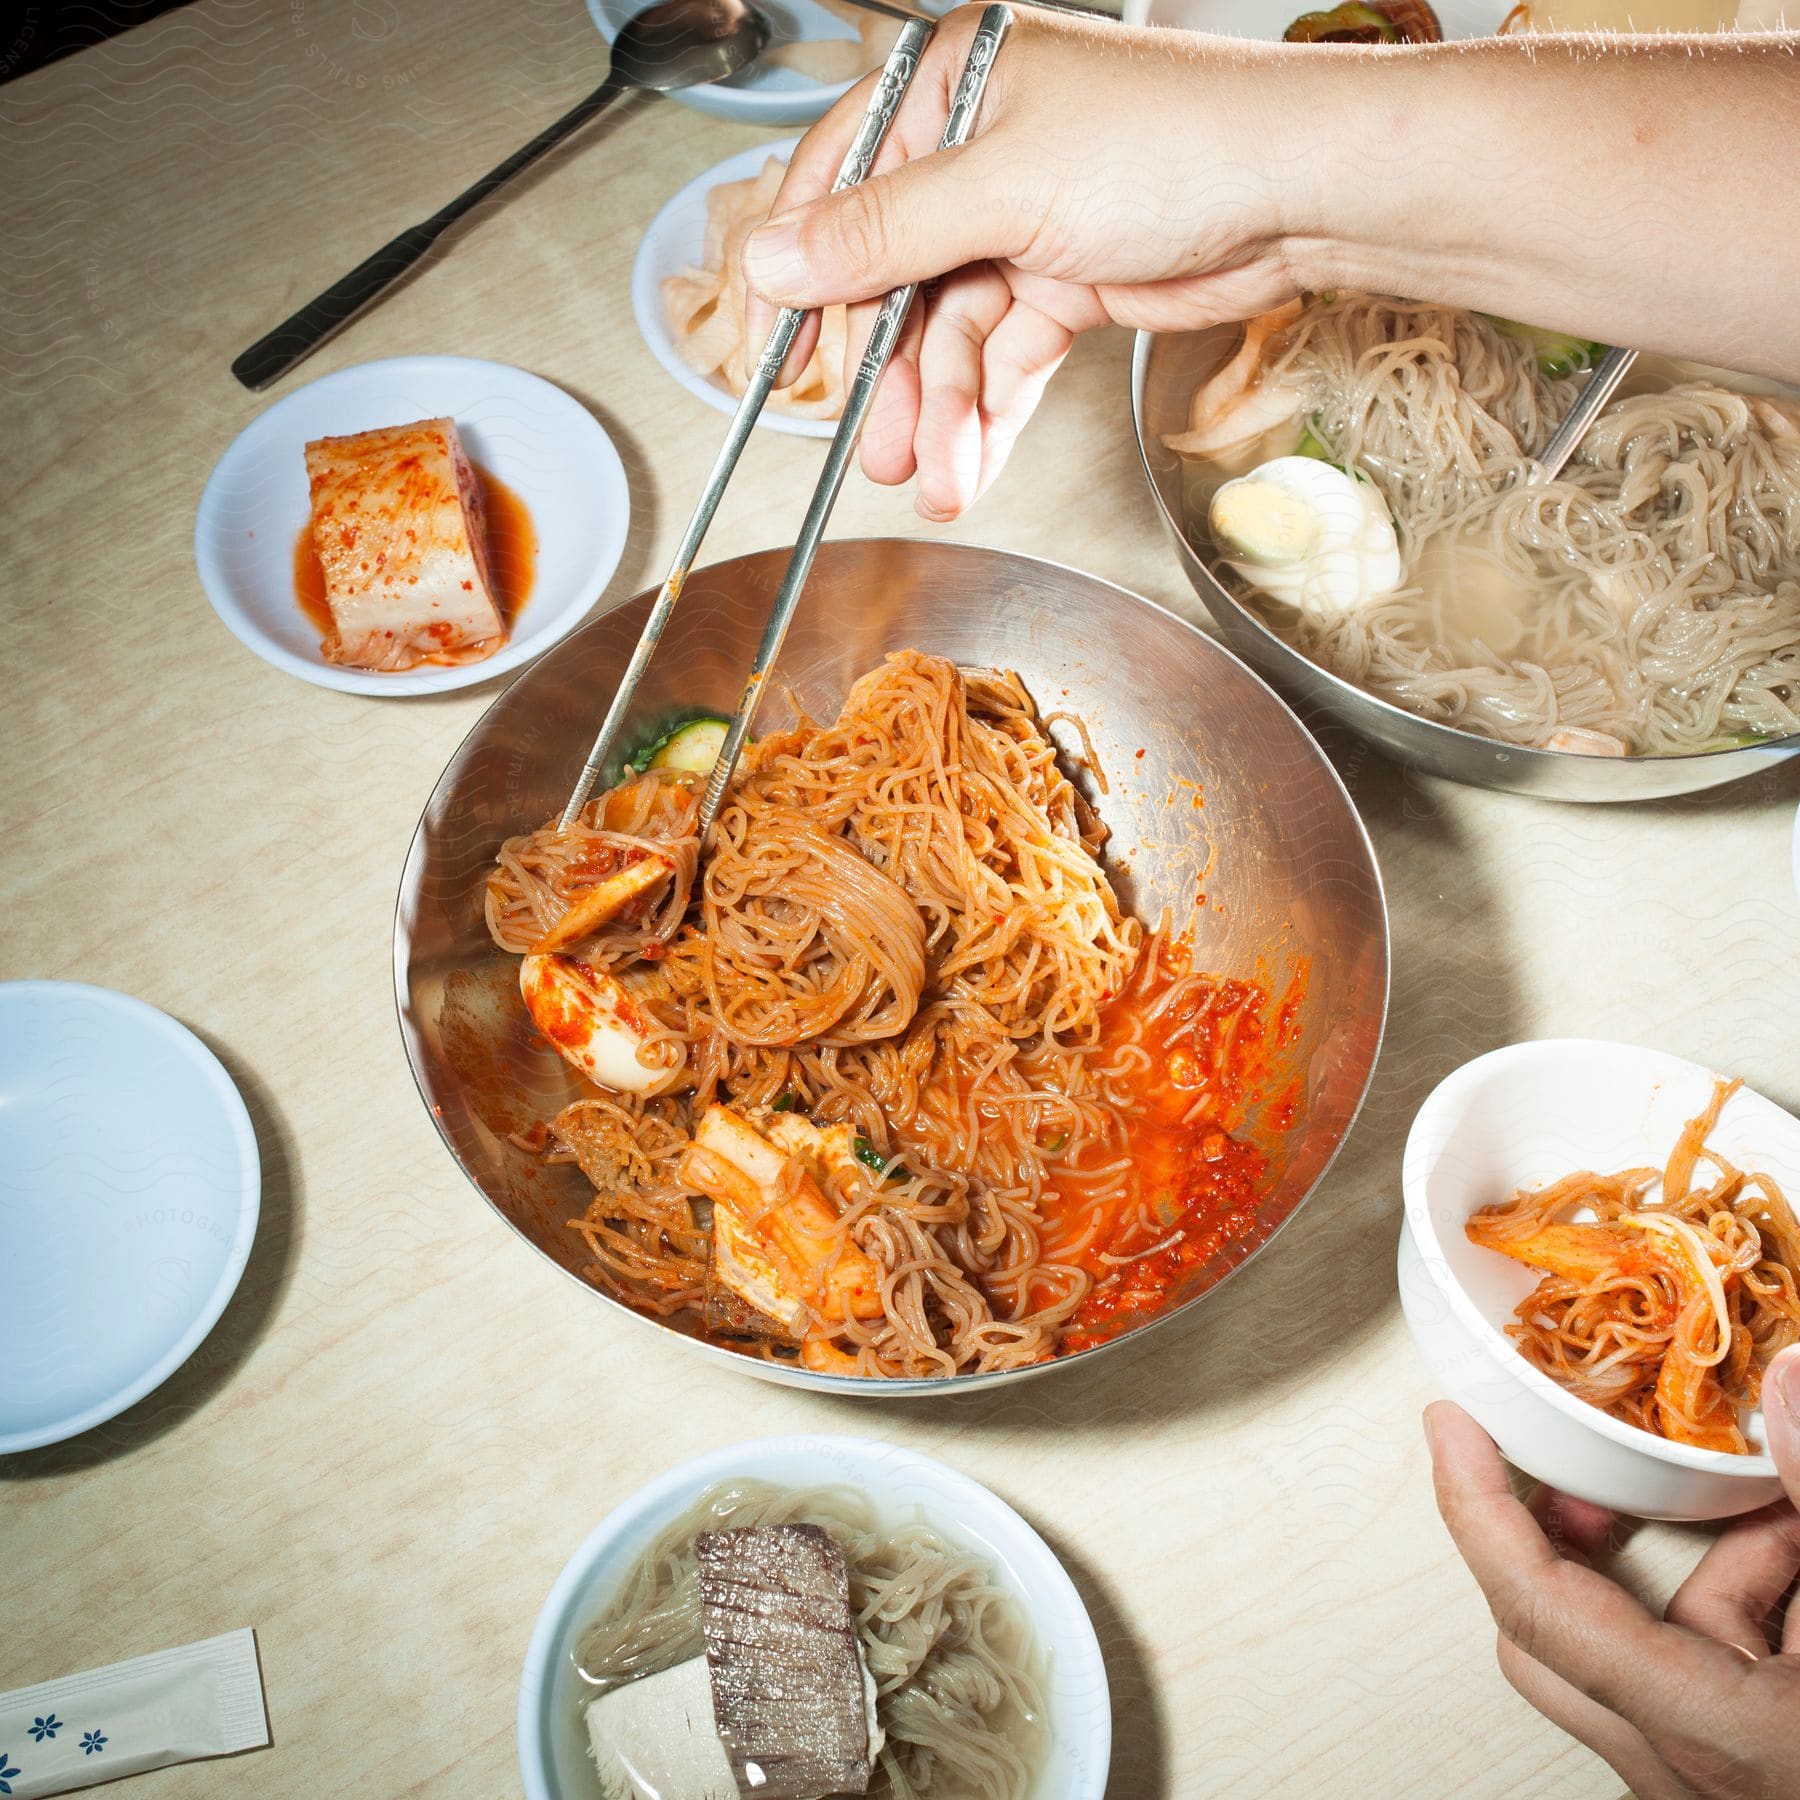 A person places asian cuisine into a white bowl